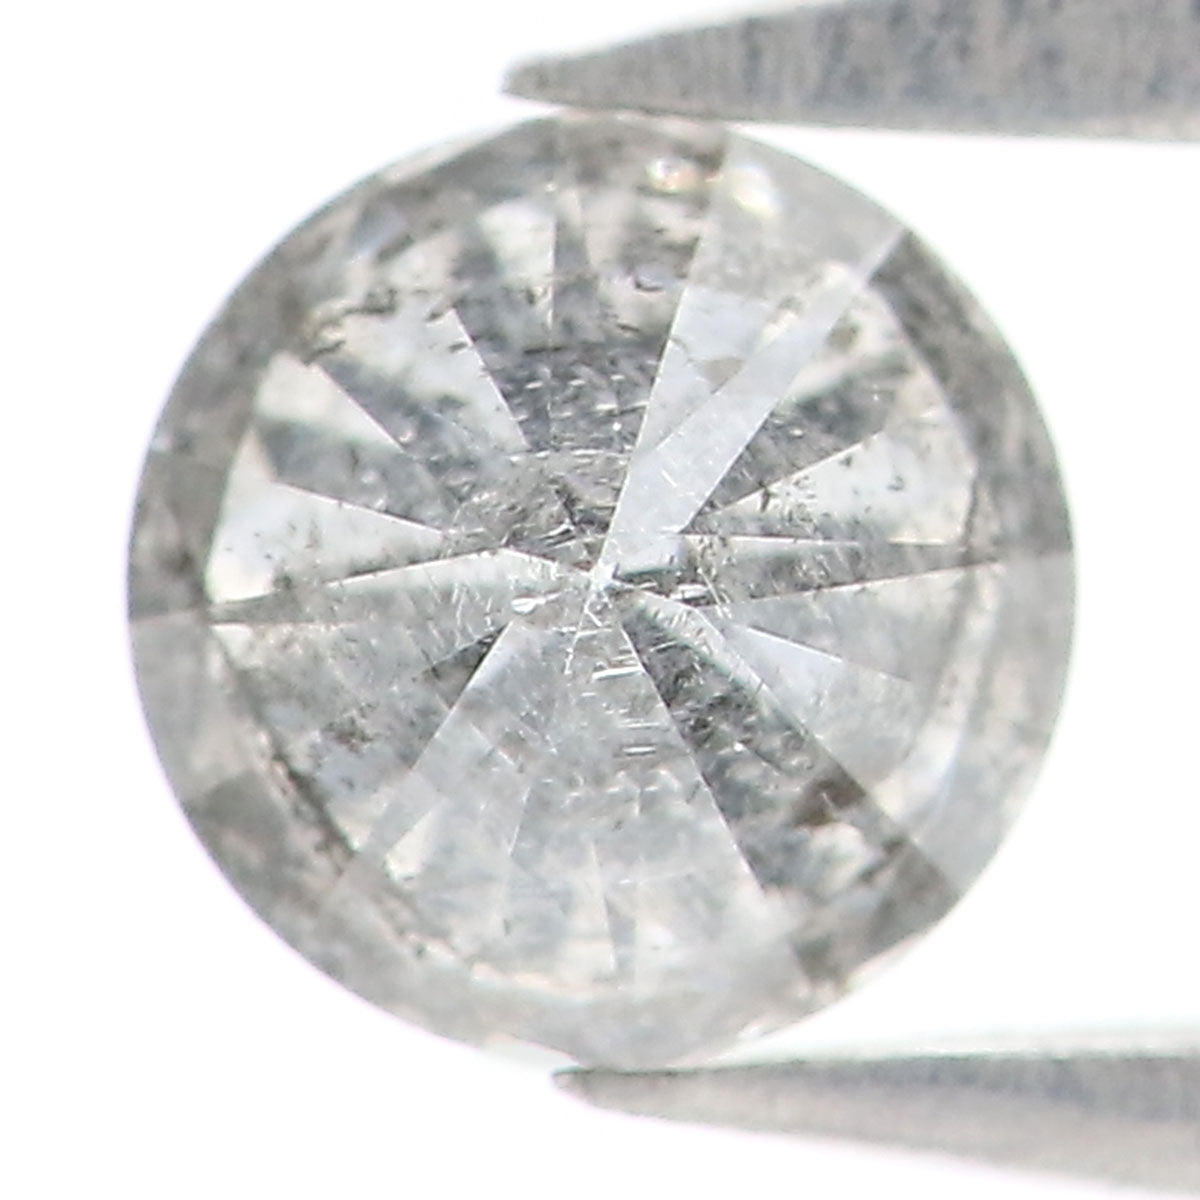 0.27 CT Natural Loose Round Shape Diamond Black Grey Color Round Cut Diamond 4.10 MM Salt And Pepper Round Brilliant Cut Diamond KQ1067